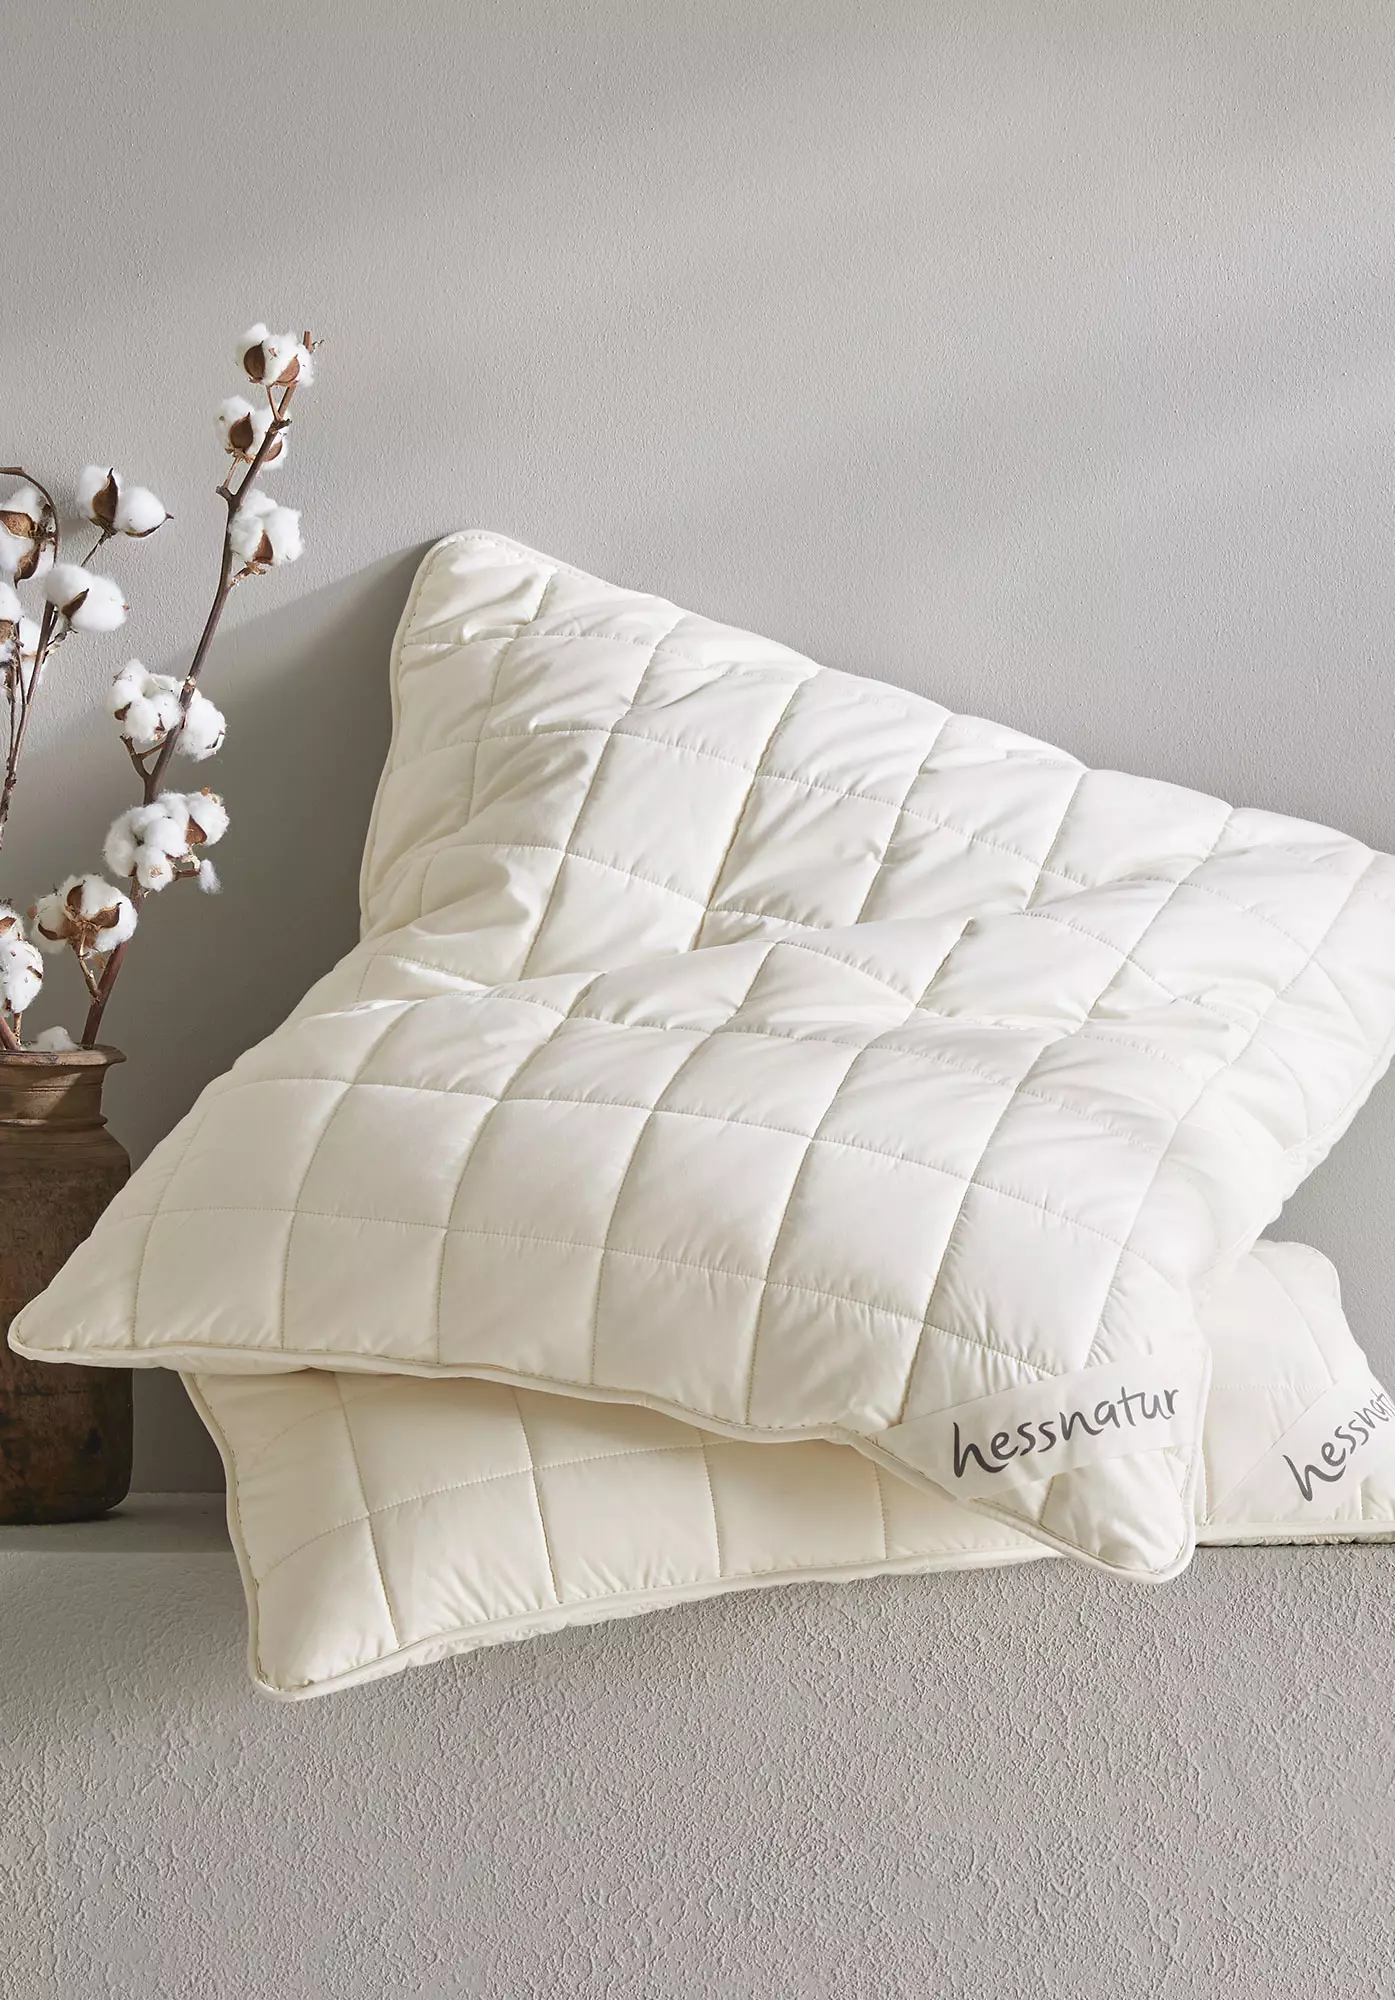 Pillows with hemp and organic cotton - 0